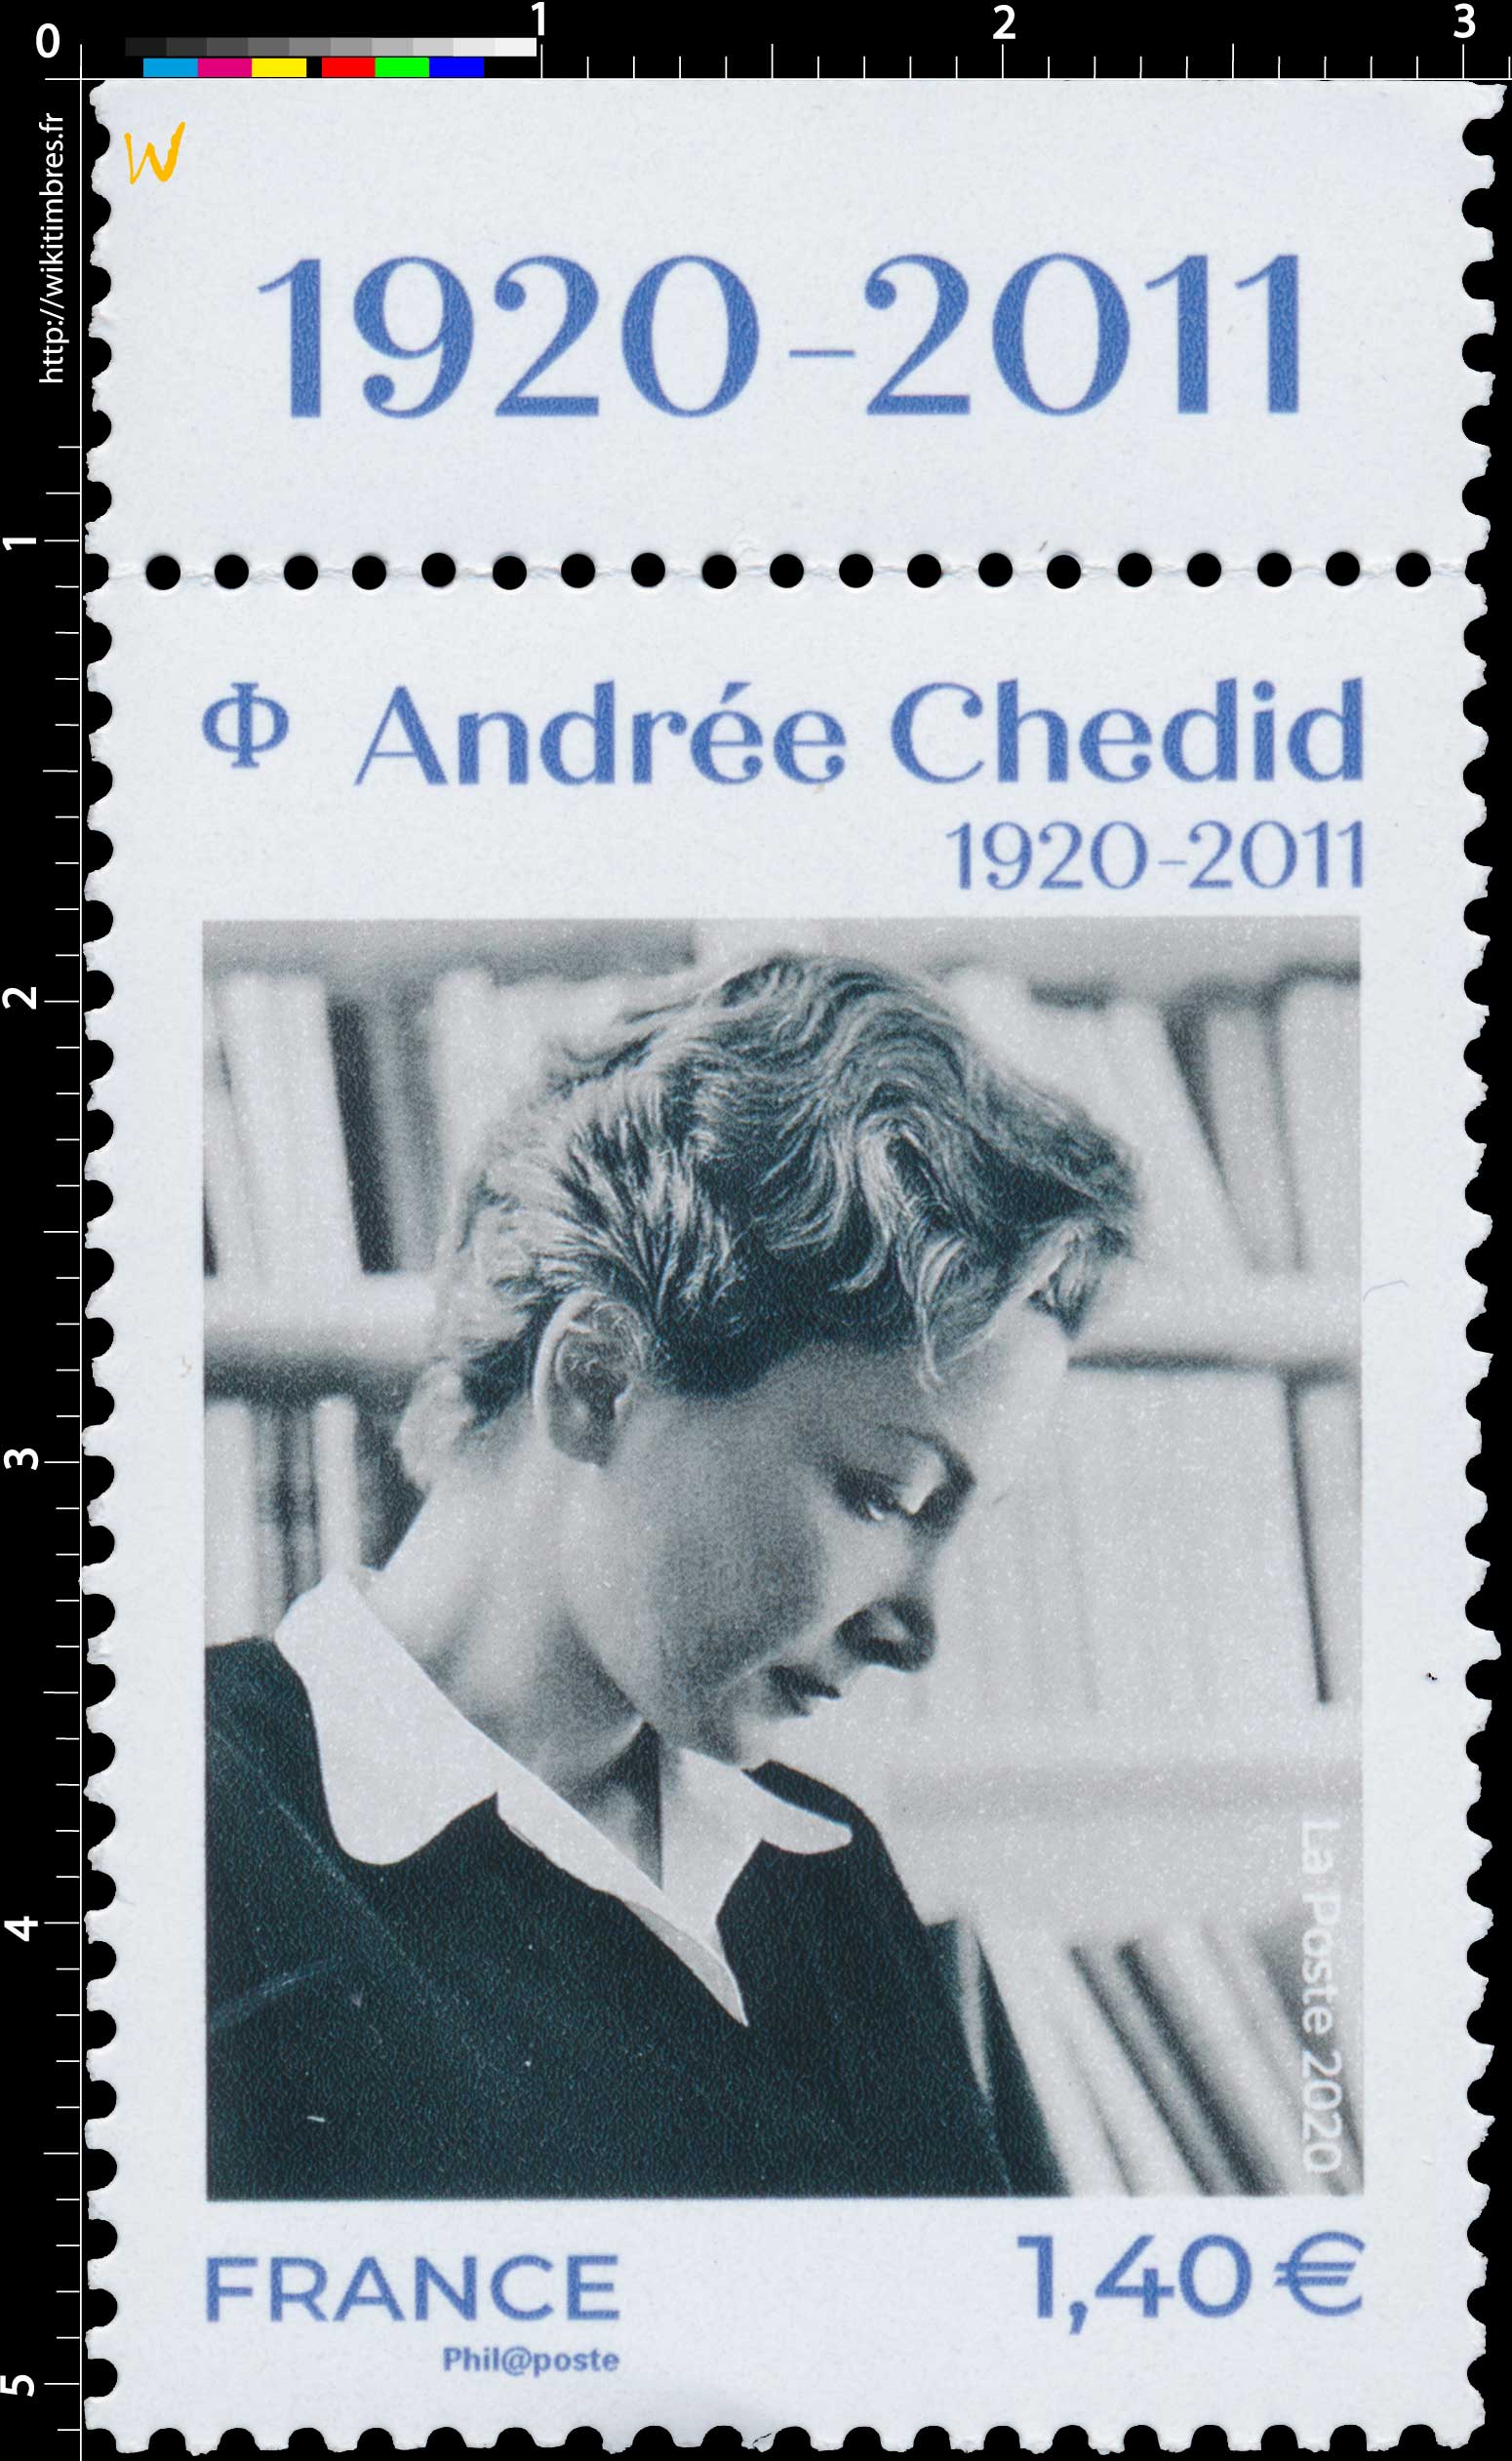 Andrée Chedid 1920 - 2011